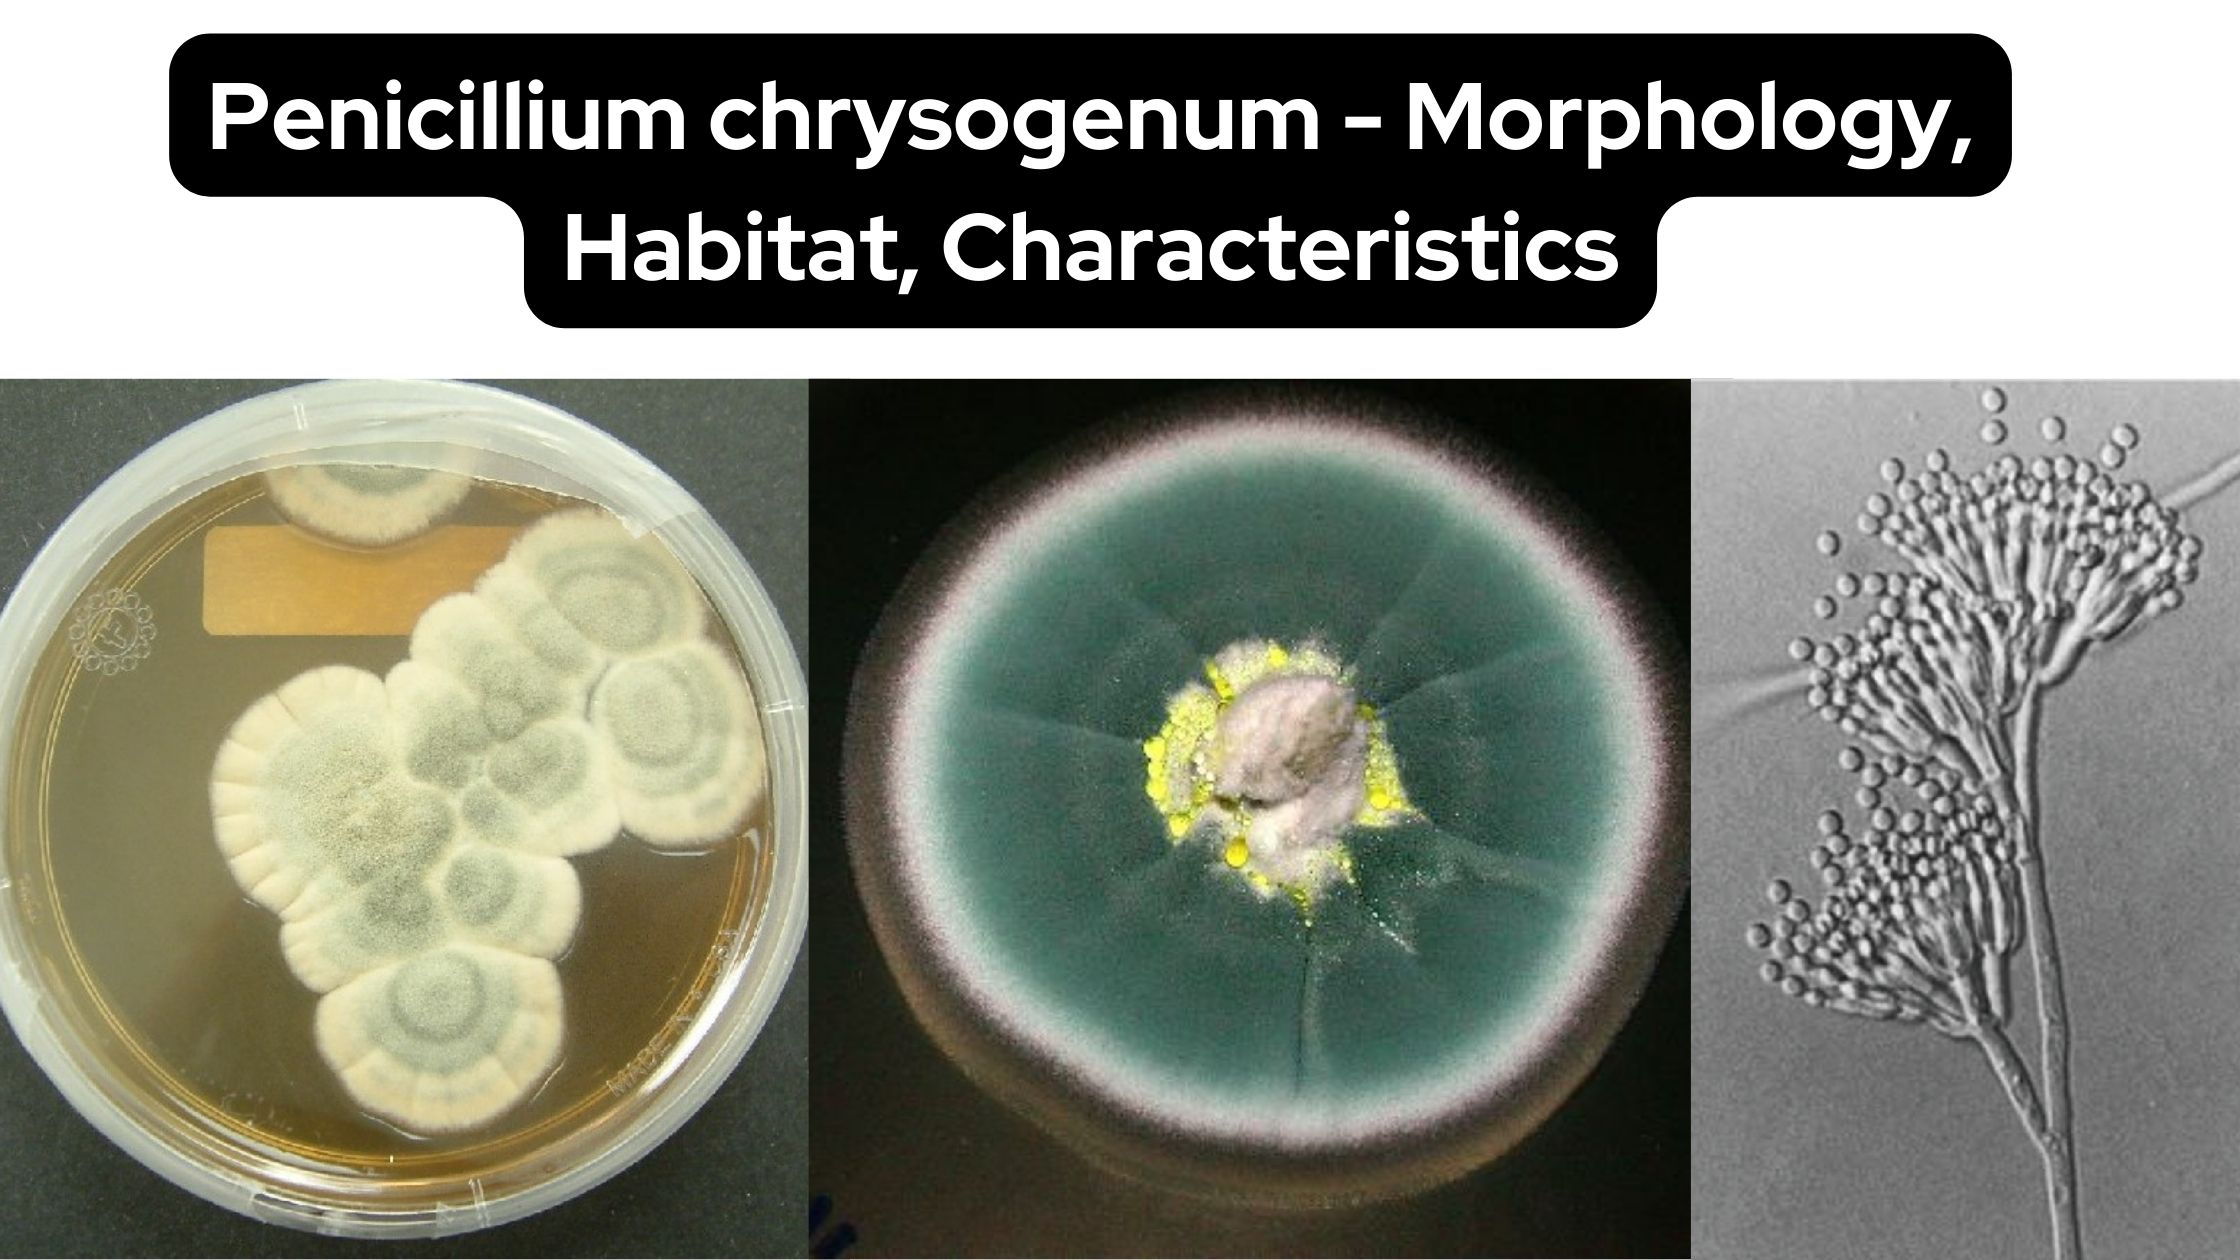 Penicillium chrysogenum - Morphology, Habitat, Characteristics